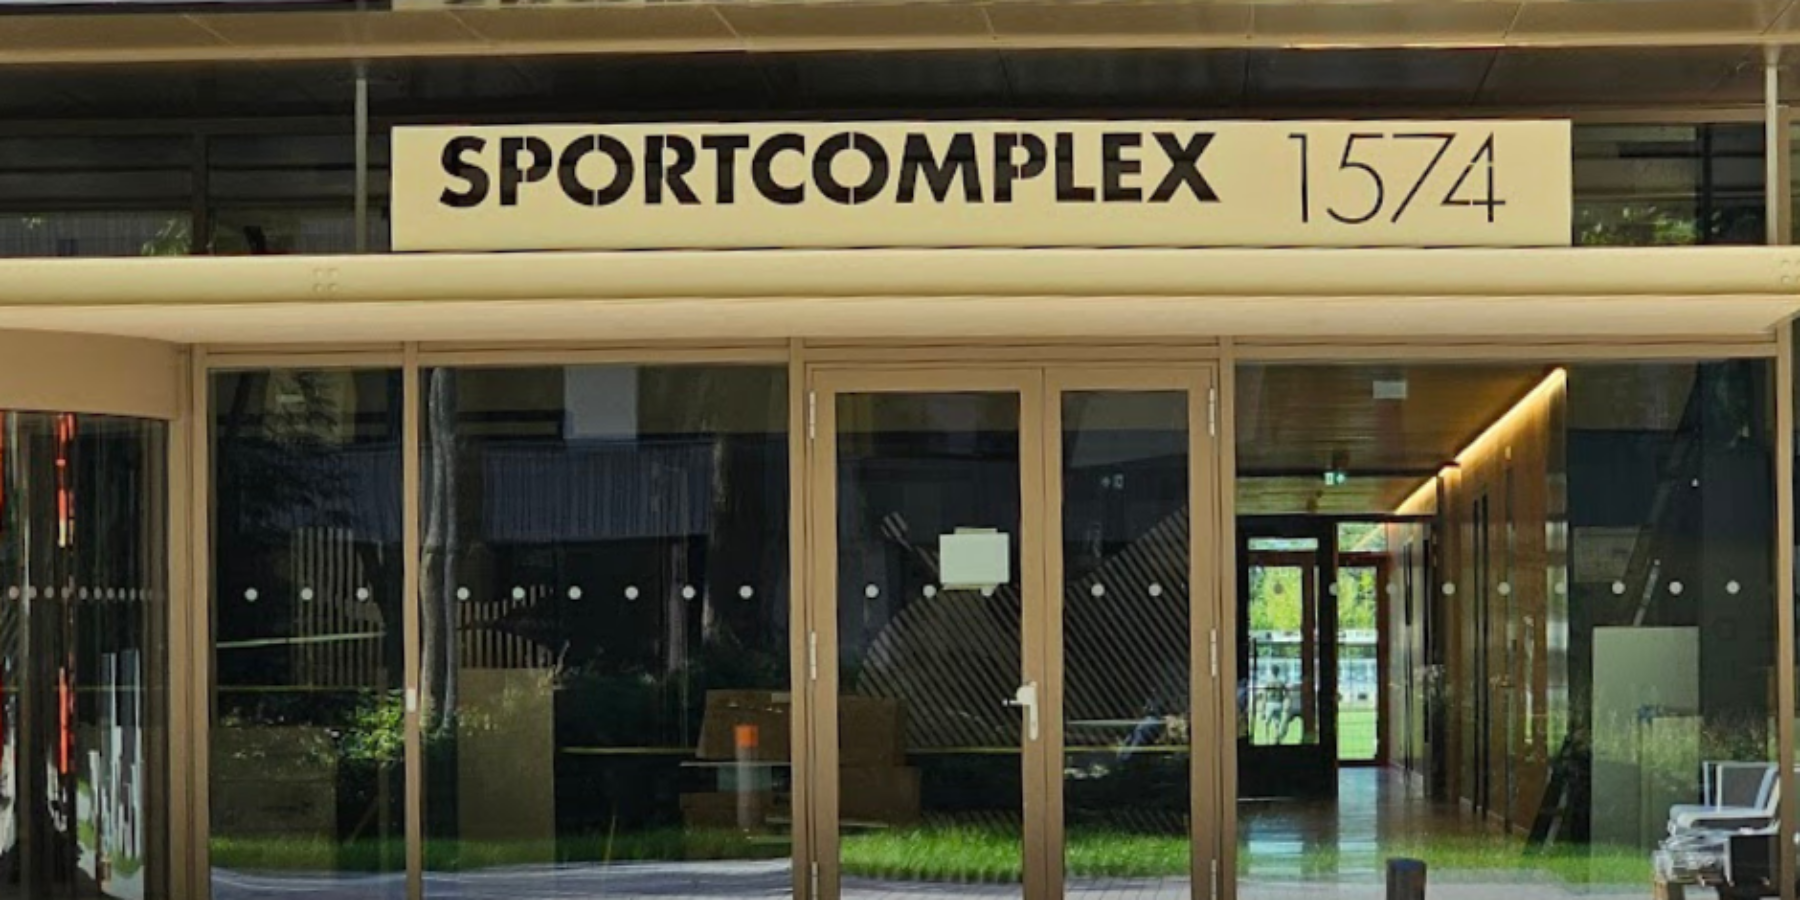 Sportcomplex 1574